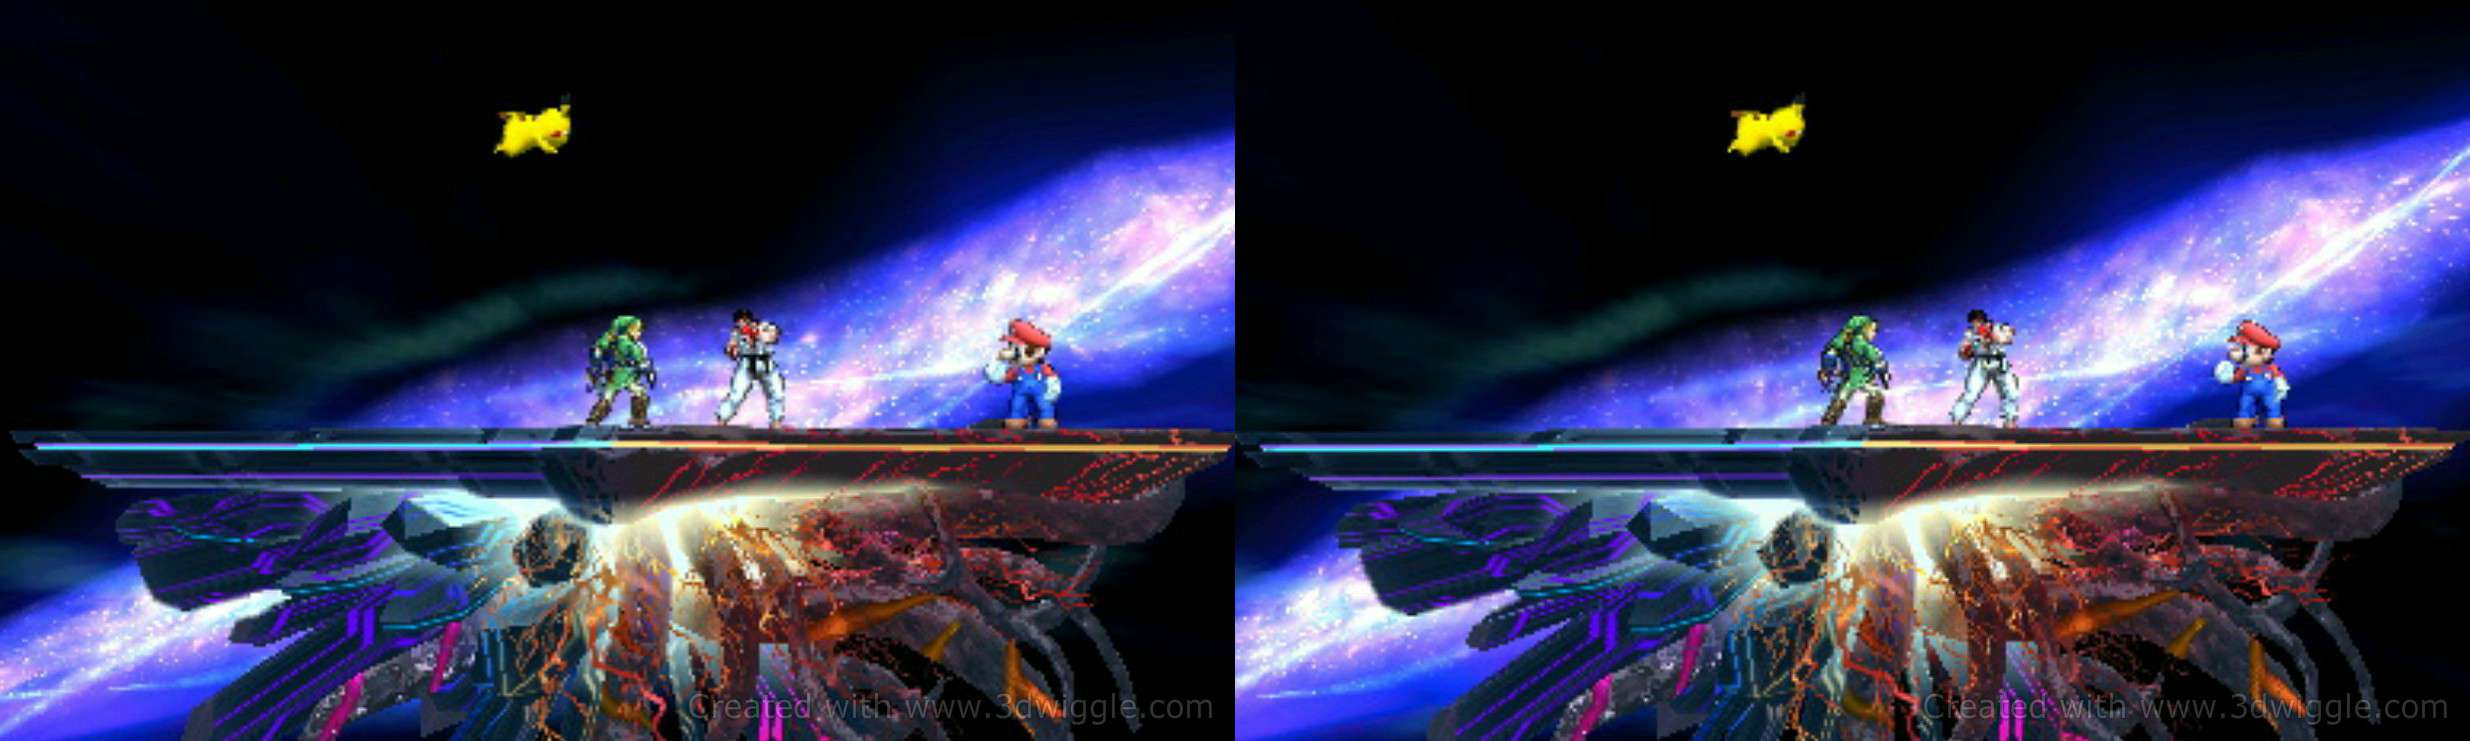 Super smash bros, Nintendo in-game screenshot, 3dwiggle